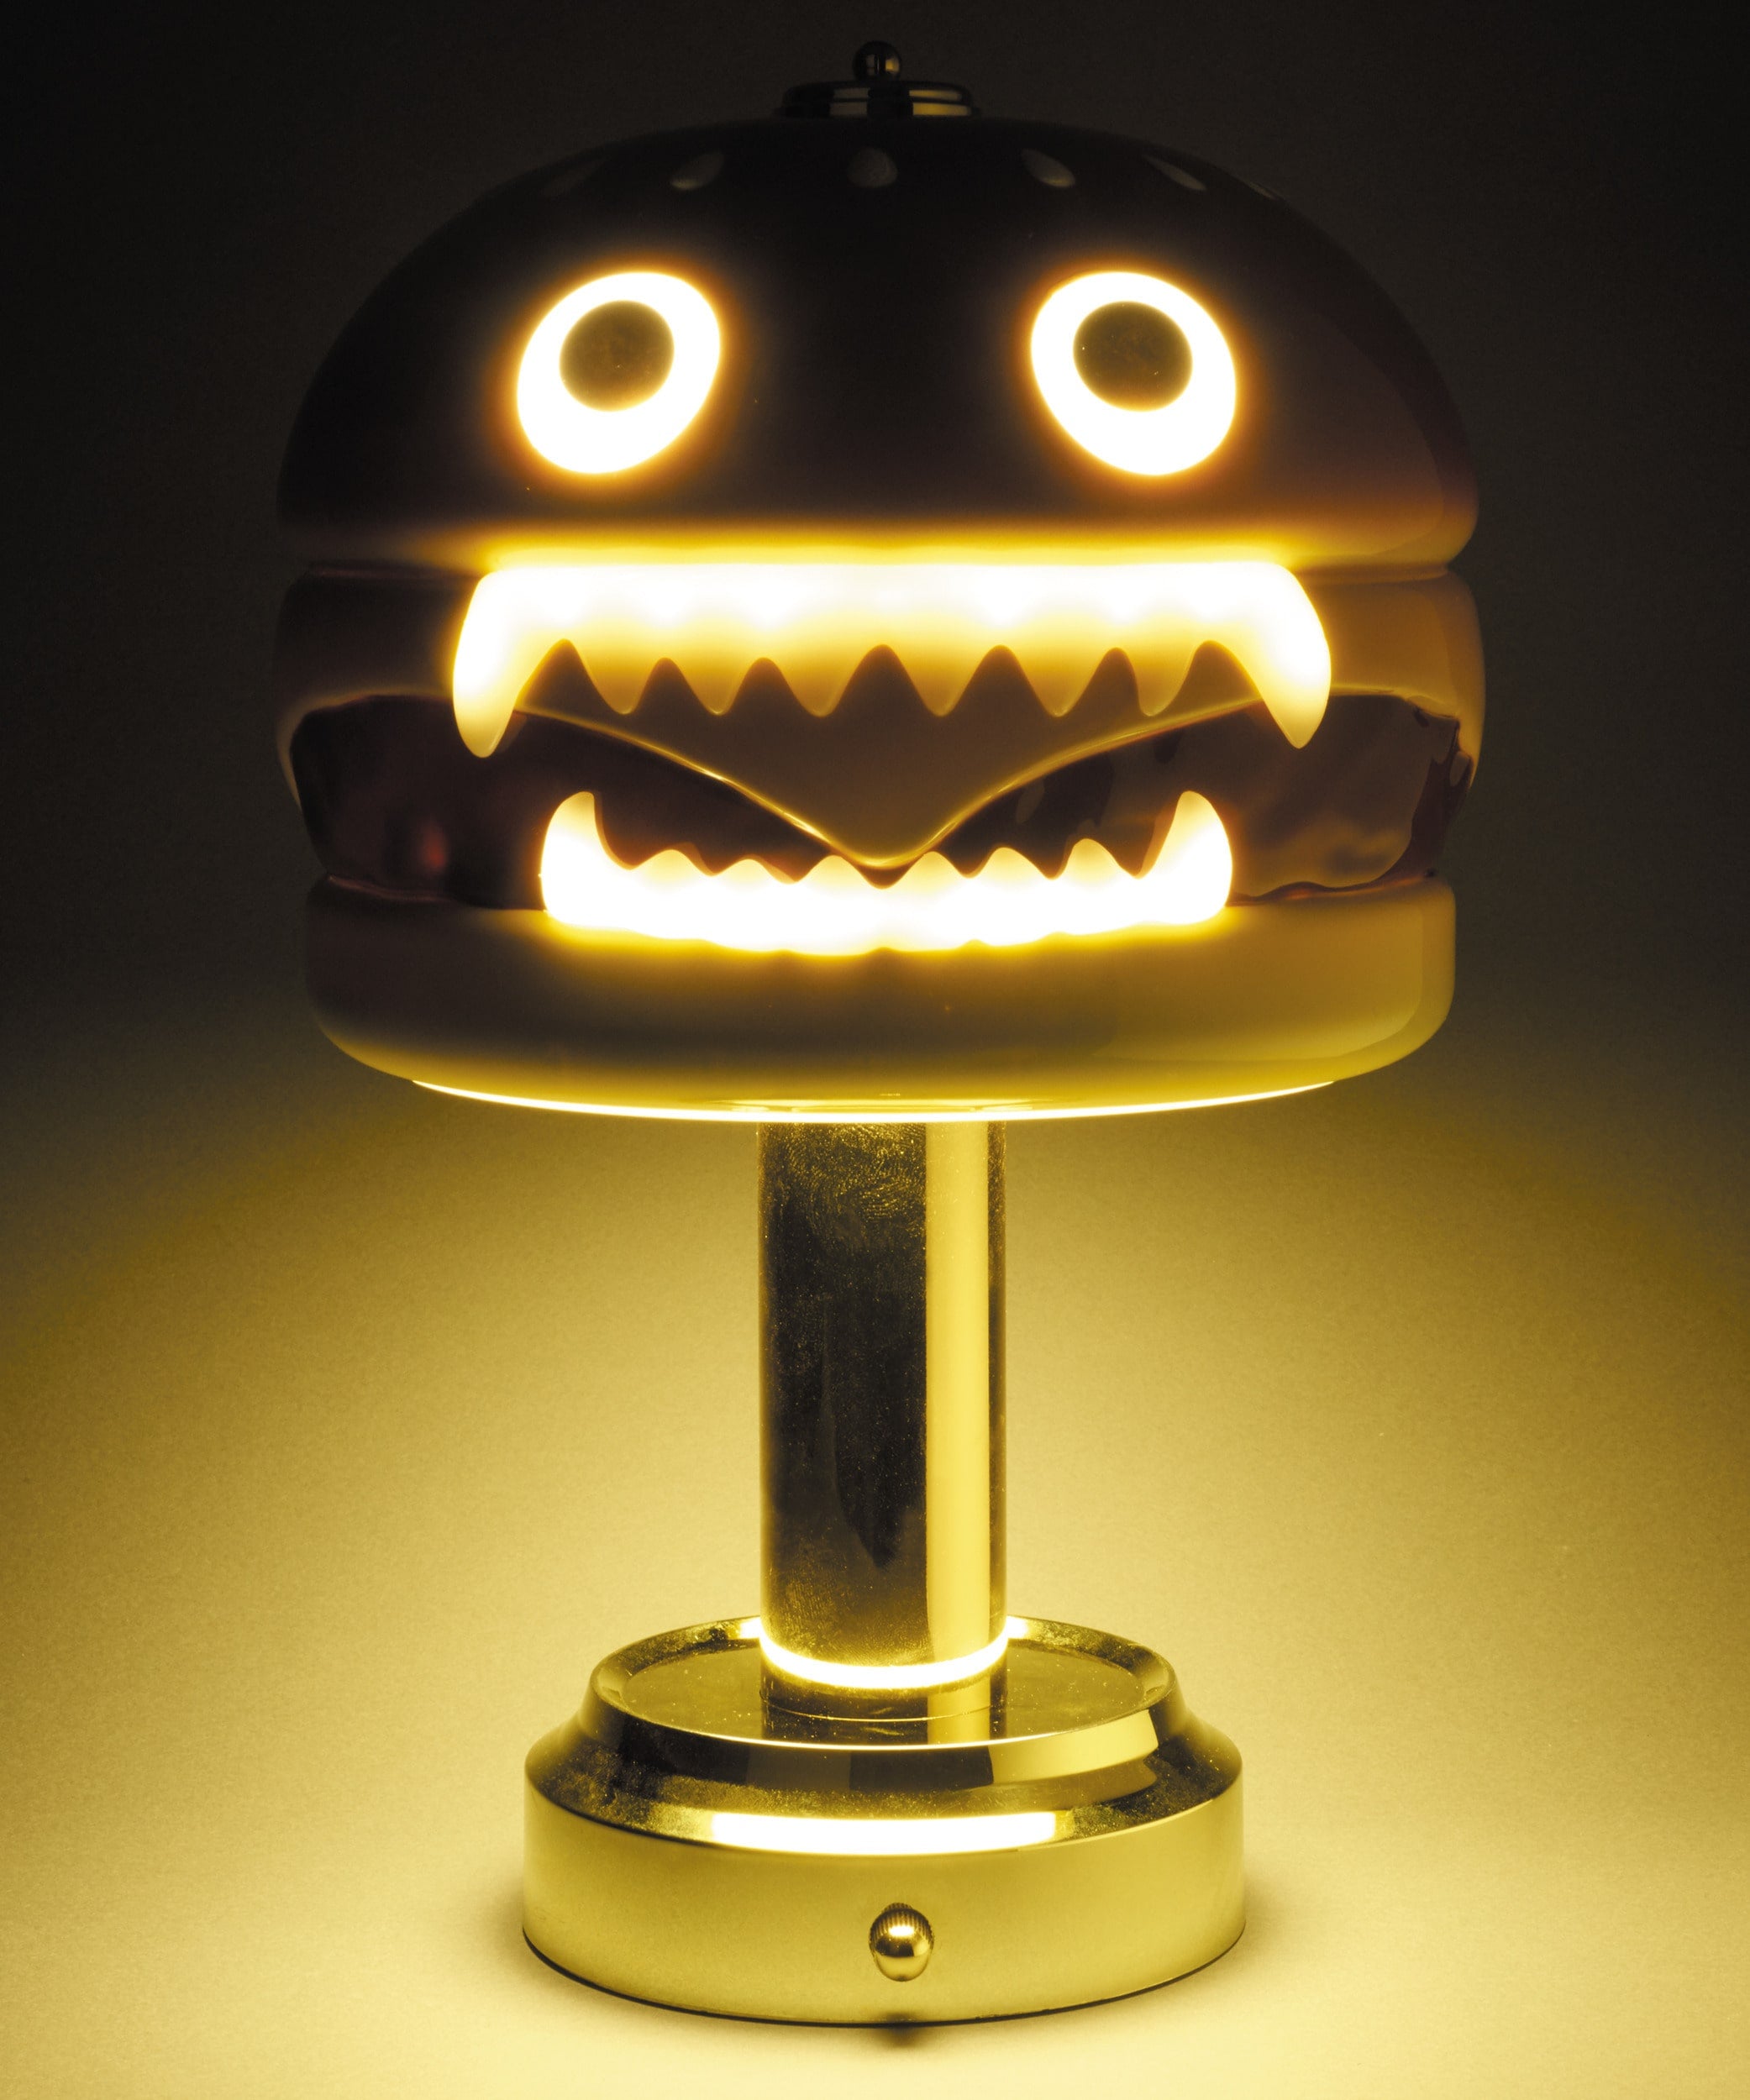 DS! Undercover x Medicom Hamburger Lamp – StylisticsJapan.com